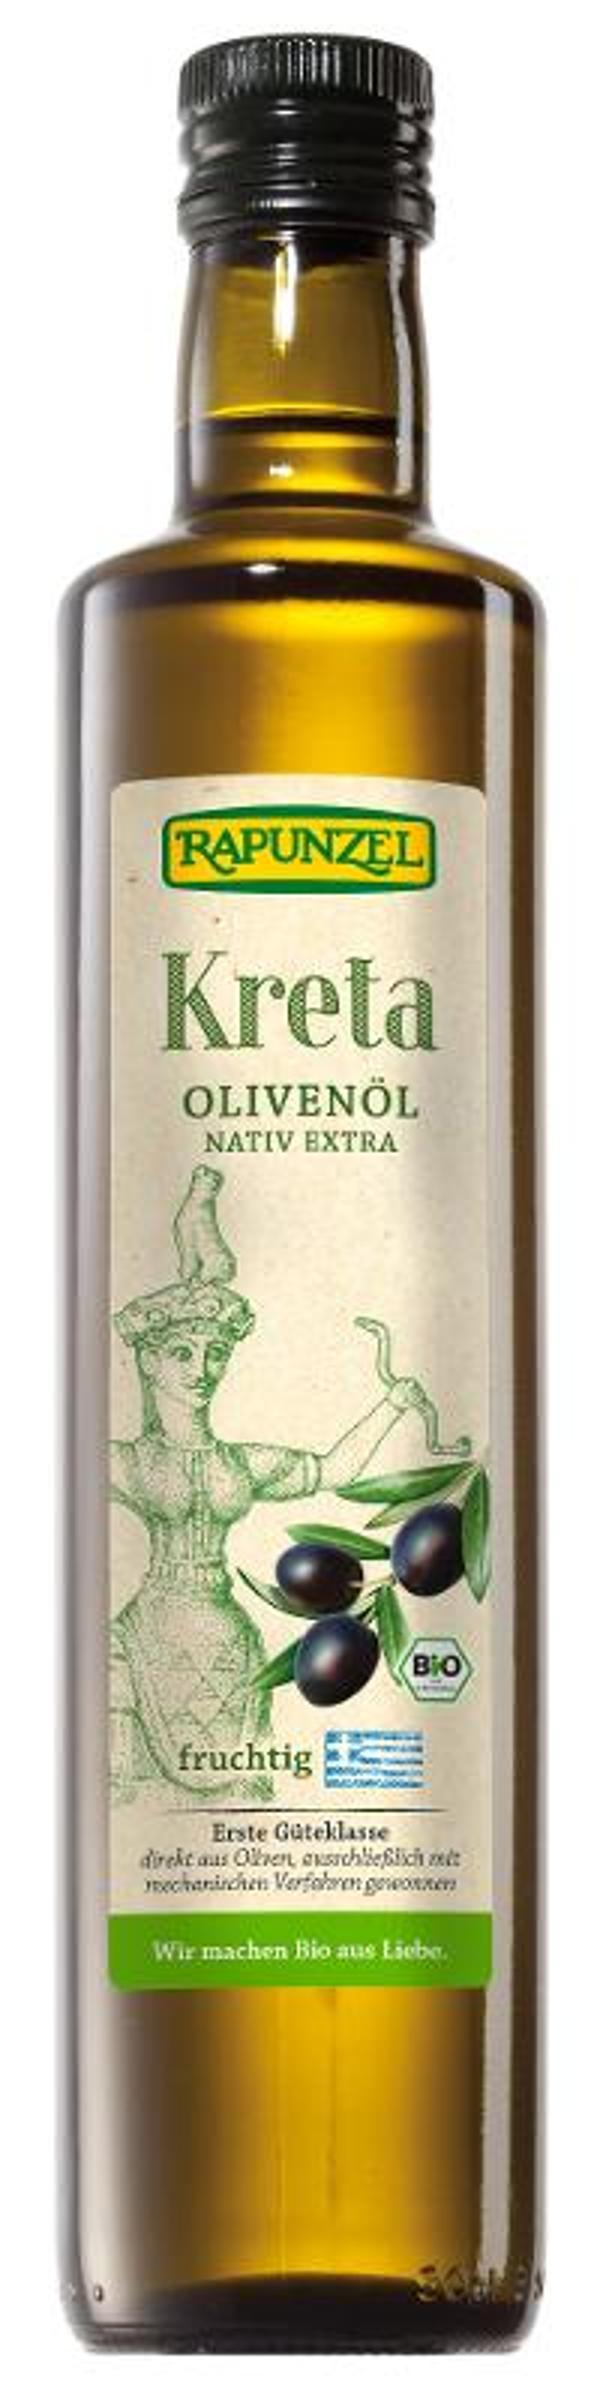 Produktfoto zu Olivenöl Kreta P.G.I. nativ extra